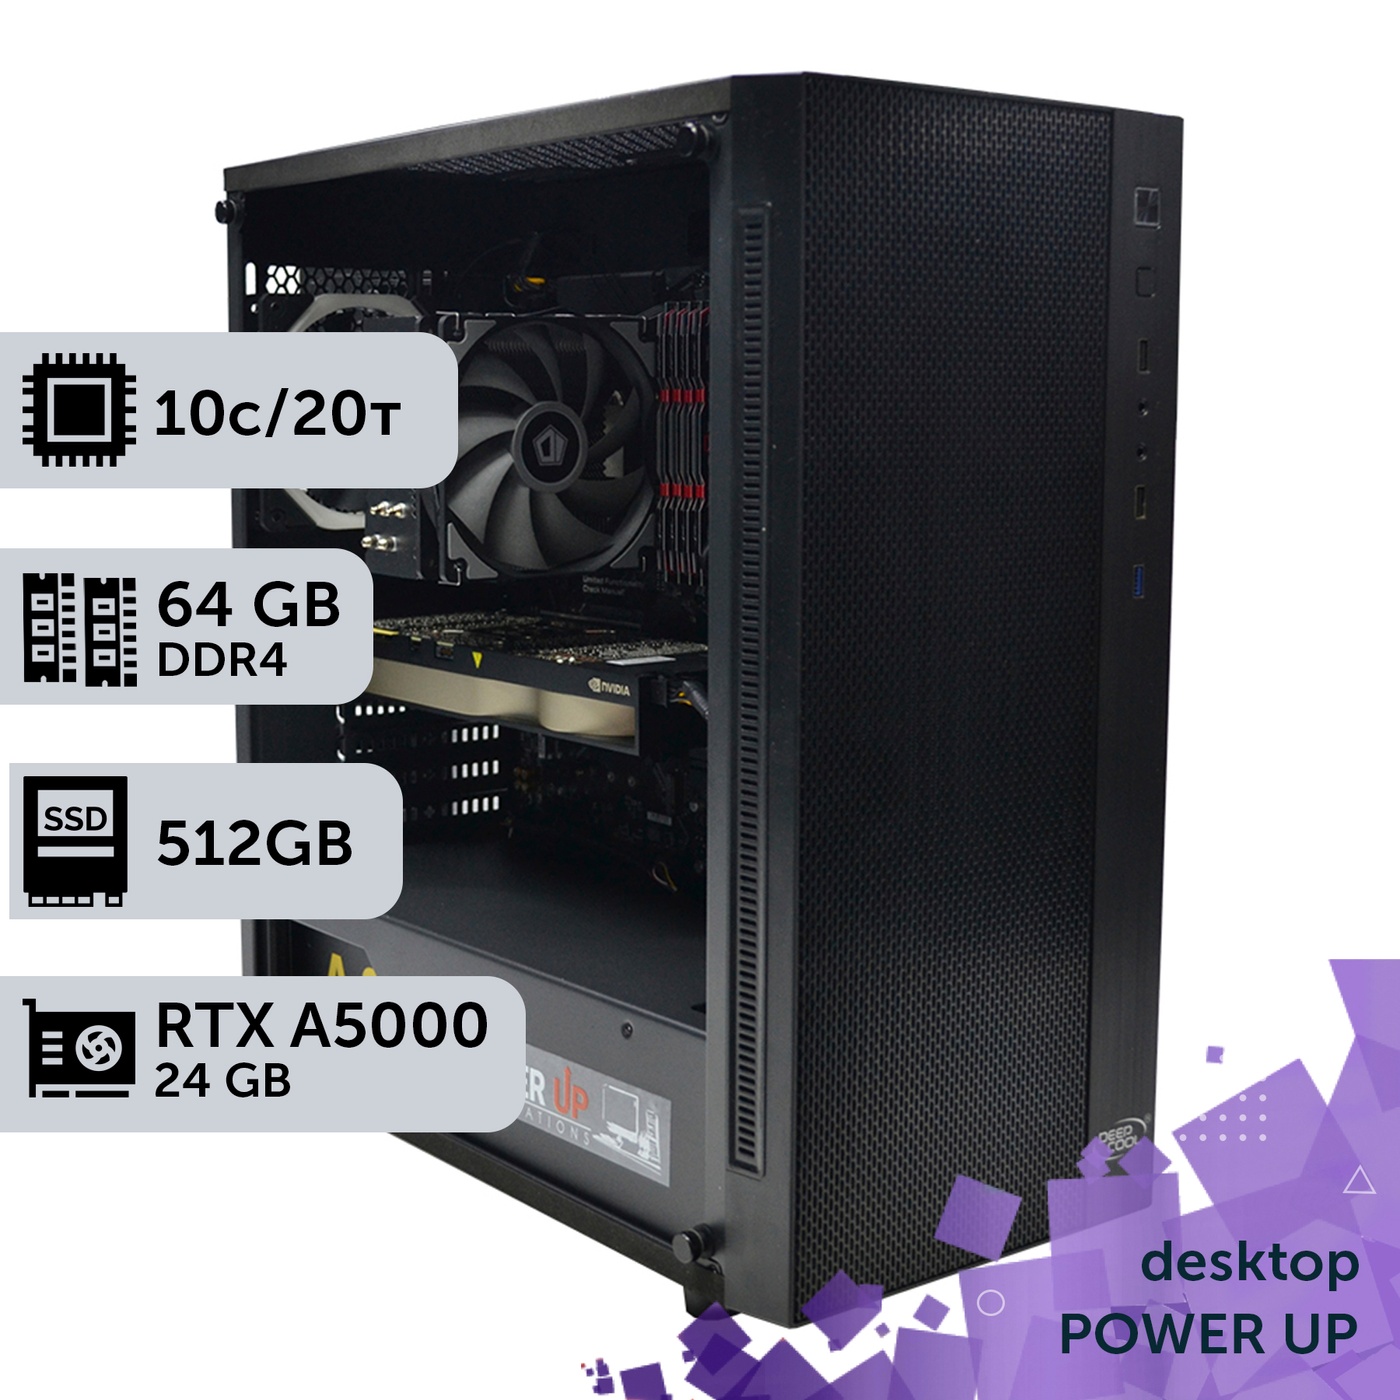 Рабочая станция PowerUp Desktop #81 Ryzen 9 5900x/64 GB/HDD 2 TB/SSD 512GB/NVIDIA Quadro RTX A5000 24GB